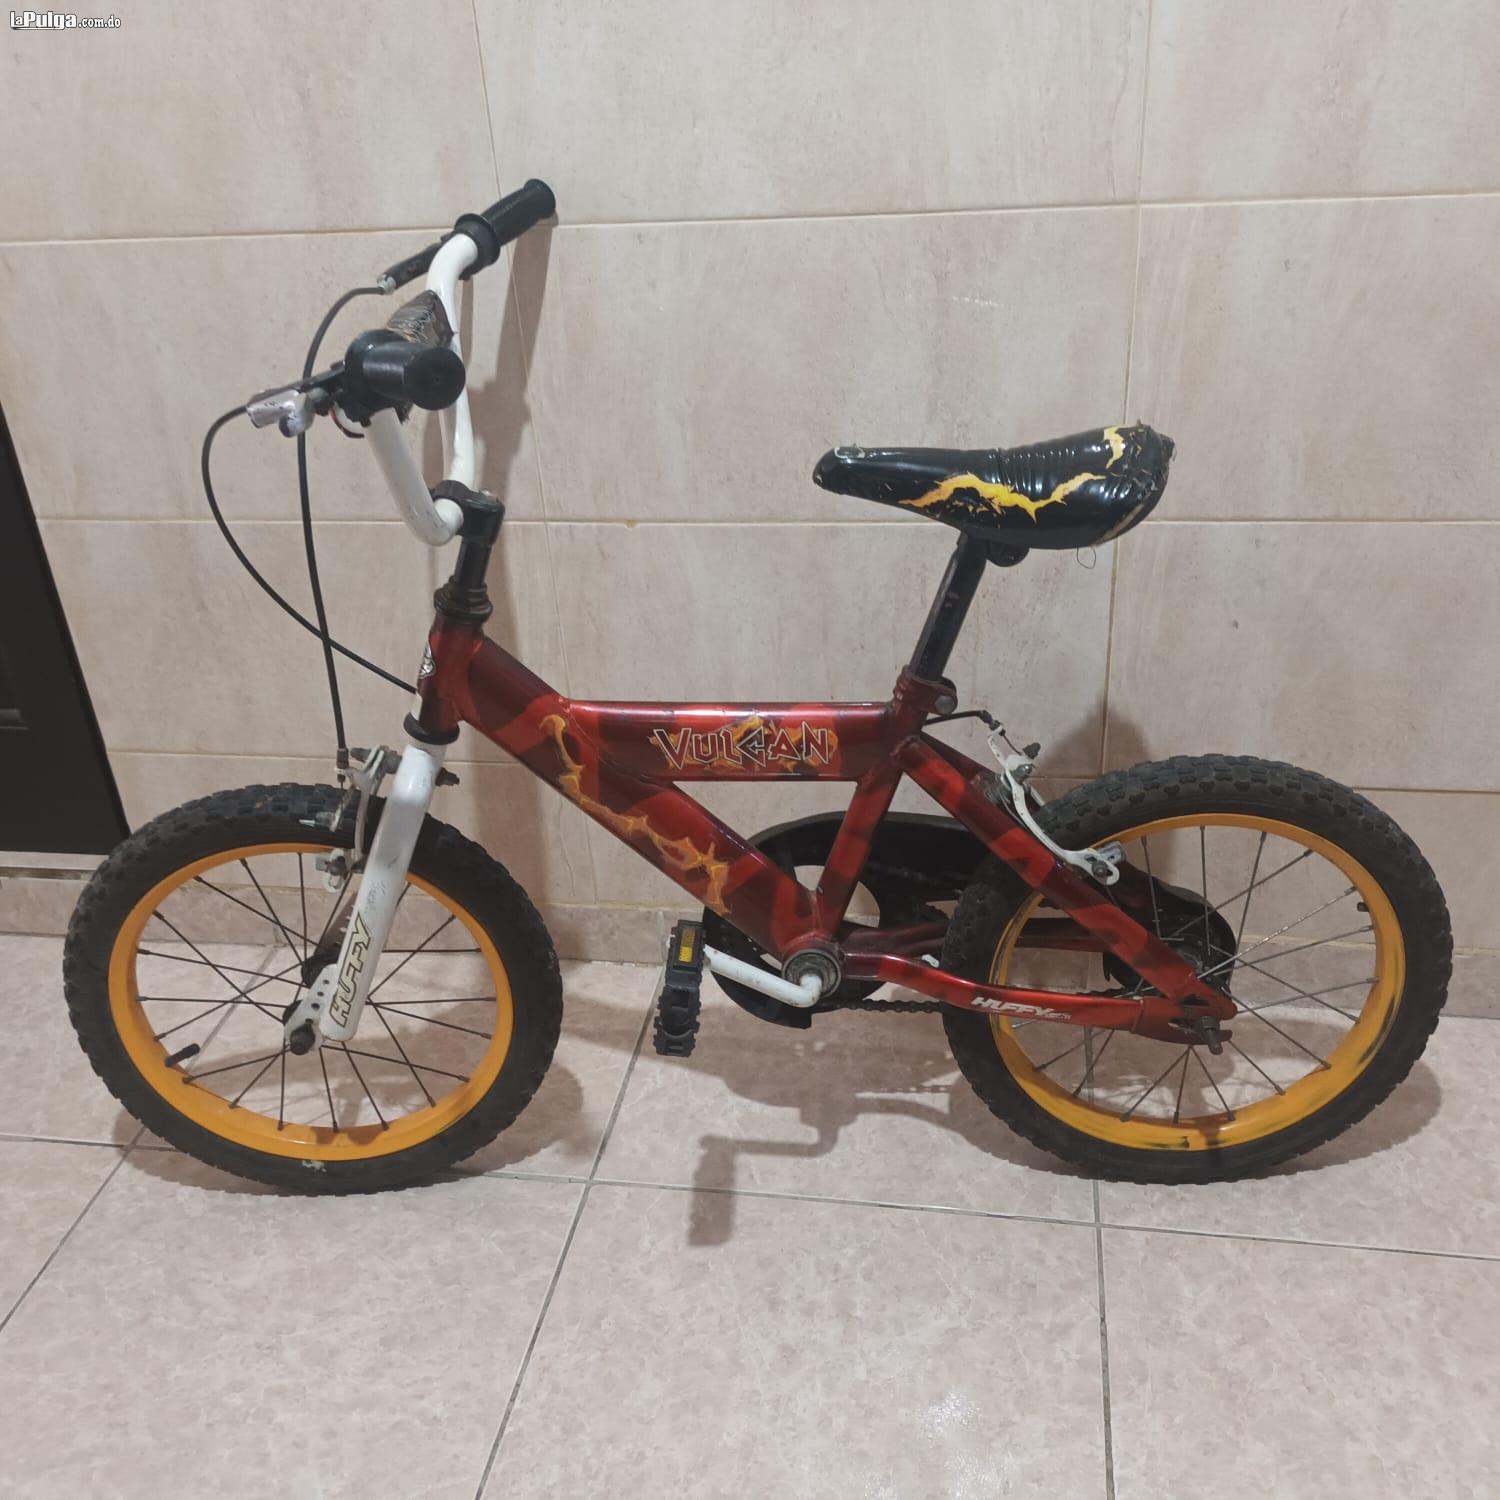 Bicicleta para niños aro 16 usada en buen estado.  Foto 7128014-1.jpg